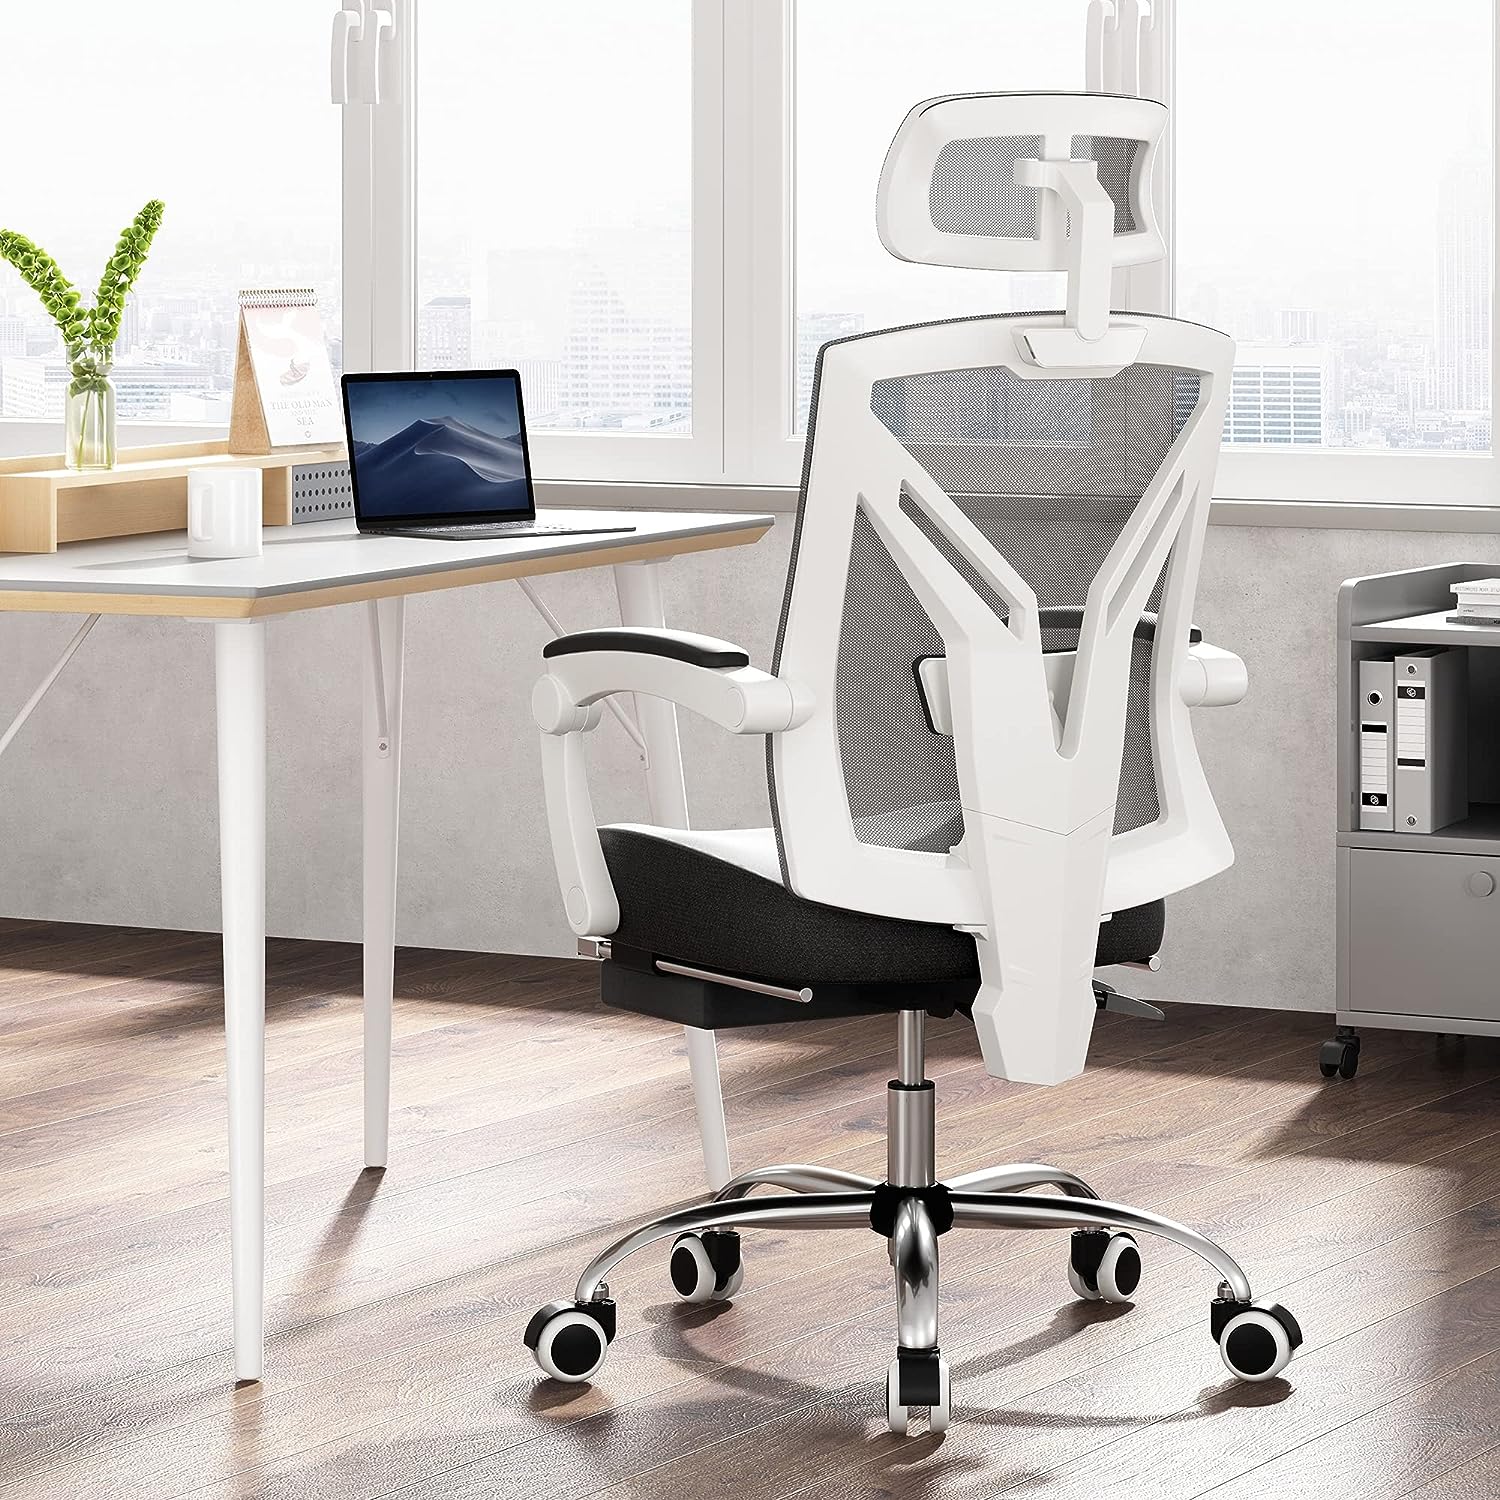 Hbada Ergonomic Office Desk Chair